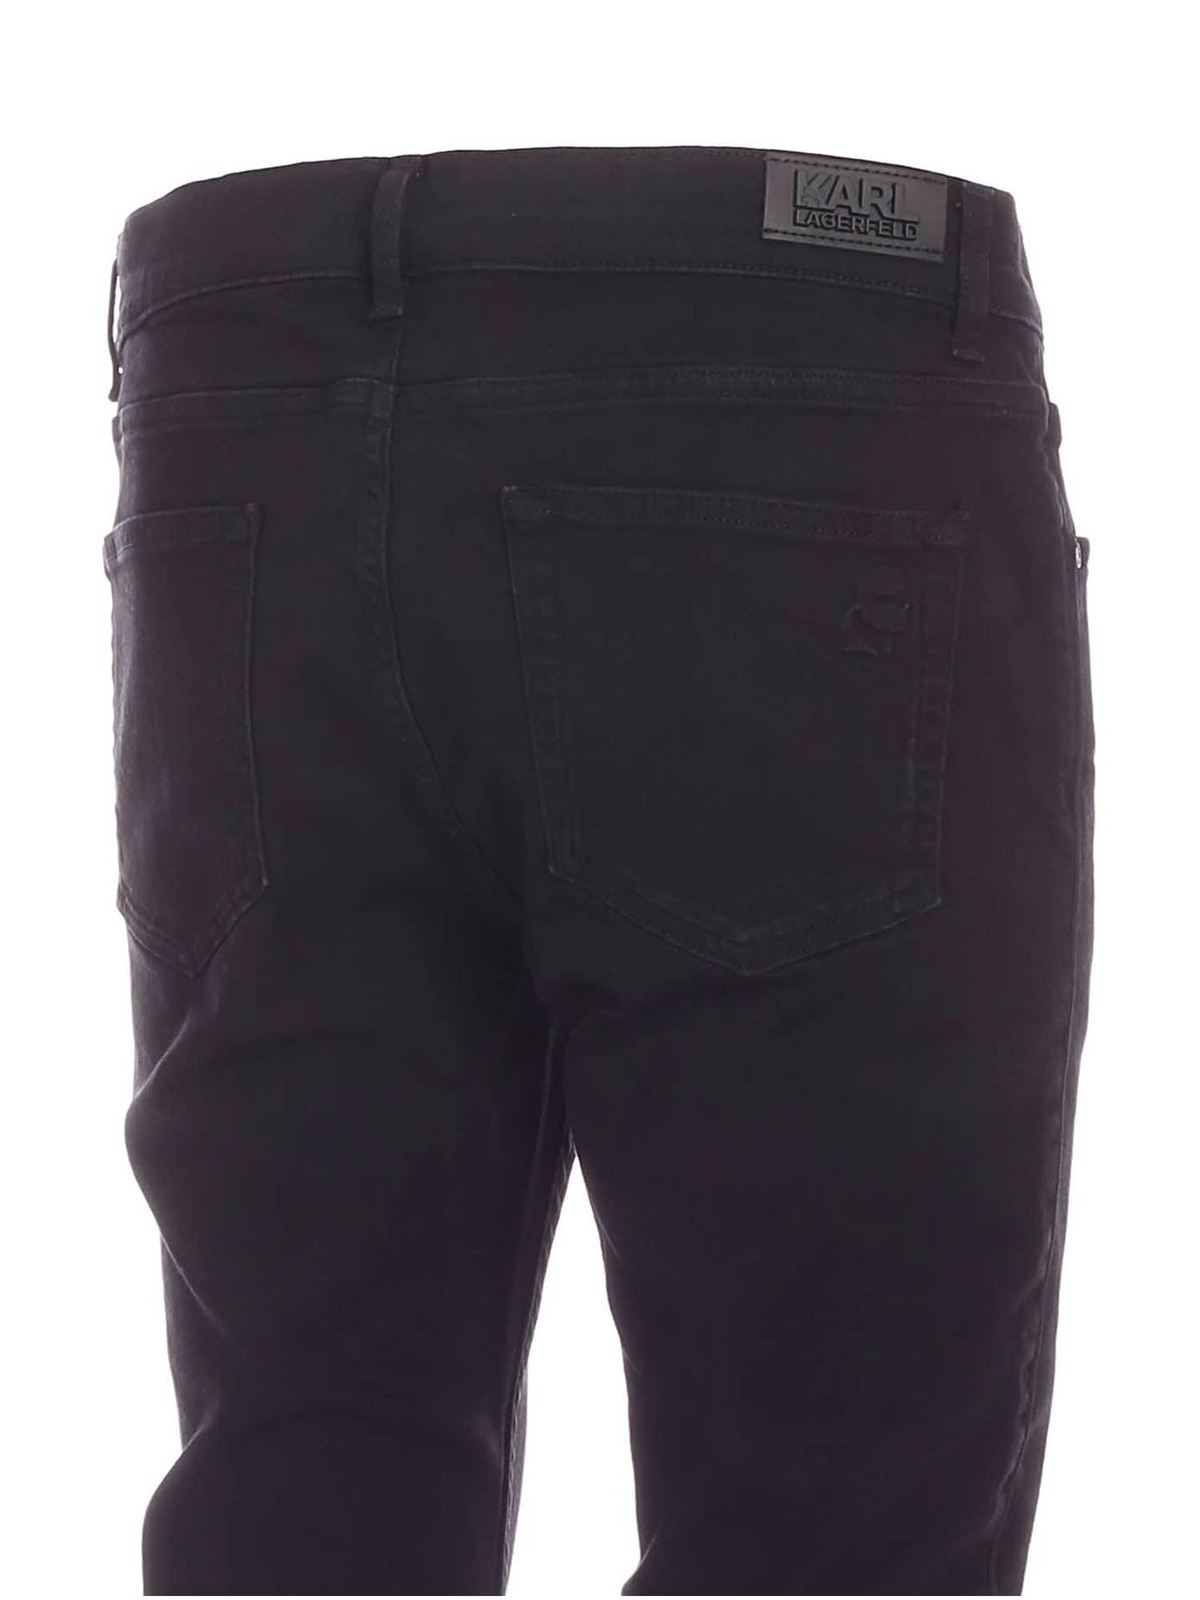 Straight leg jeans Karl Lagerfeld - 5-pocket jeans in black ...